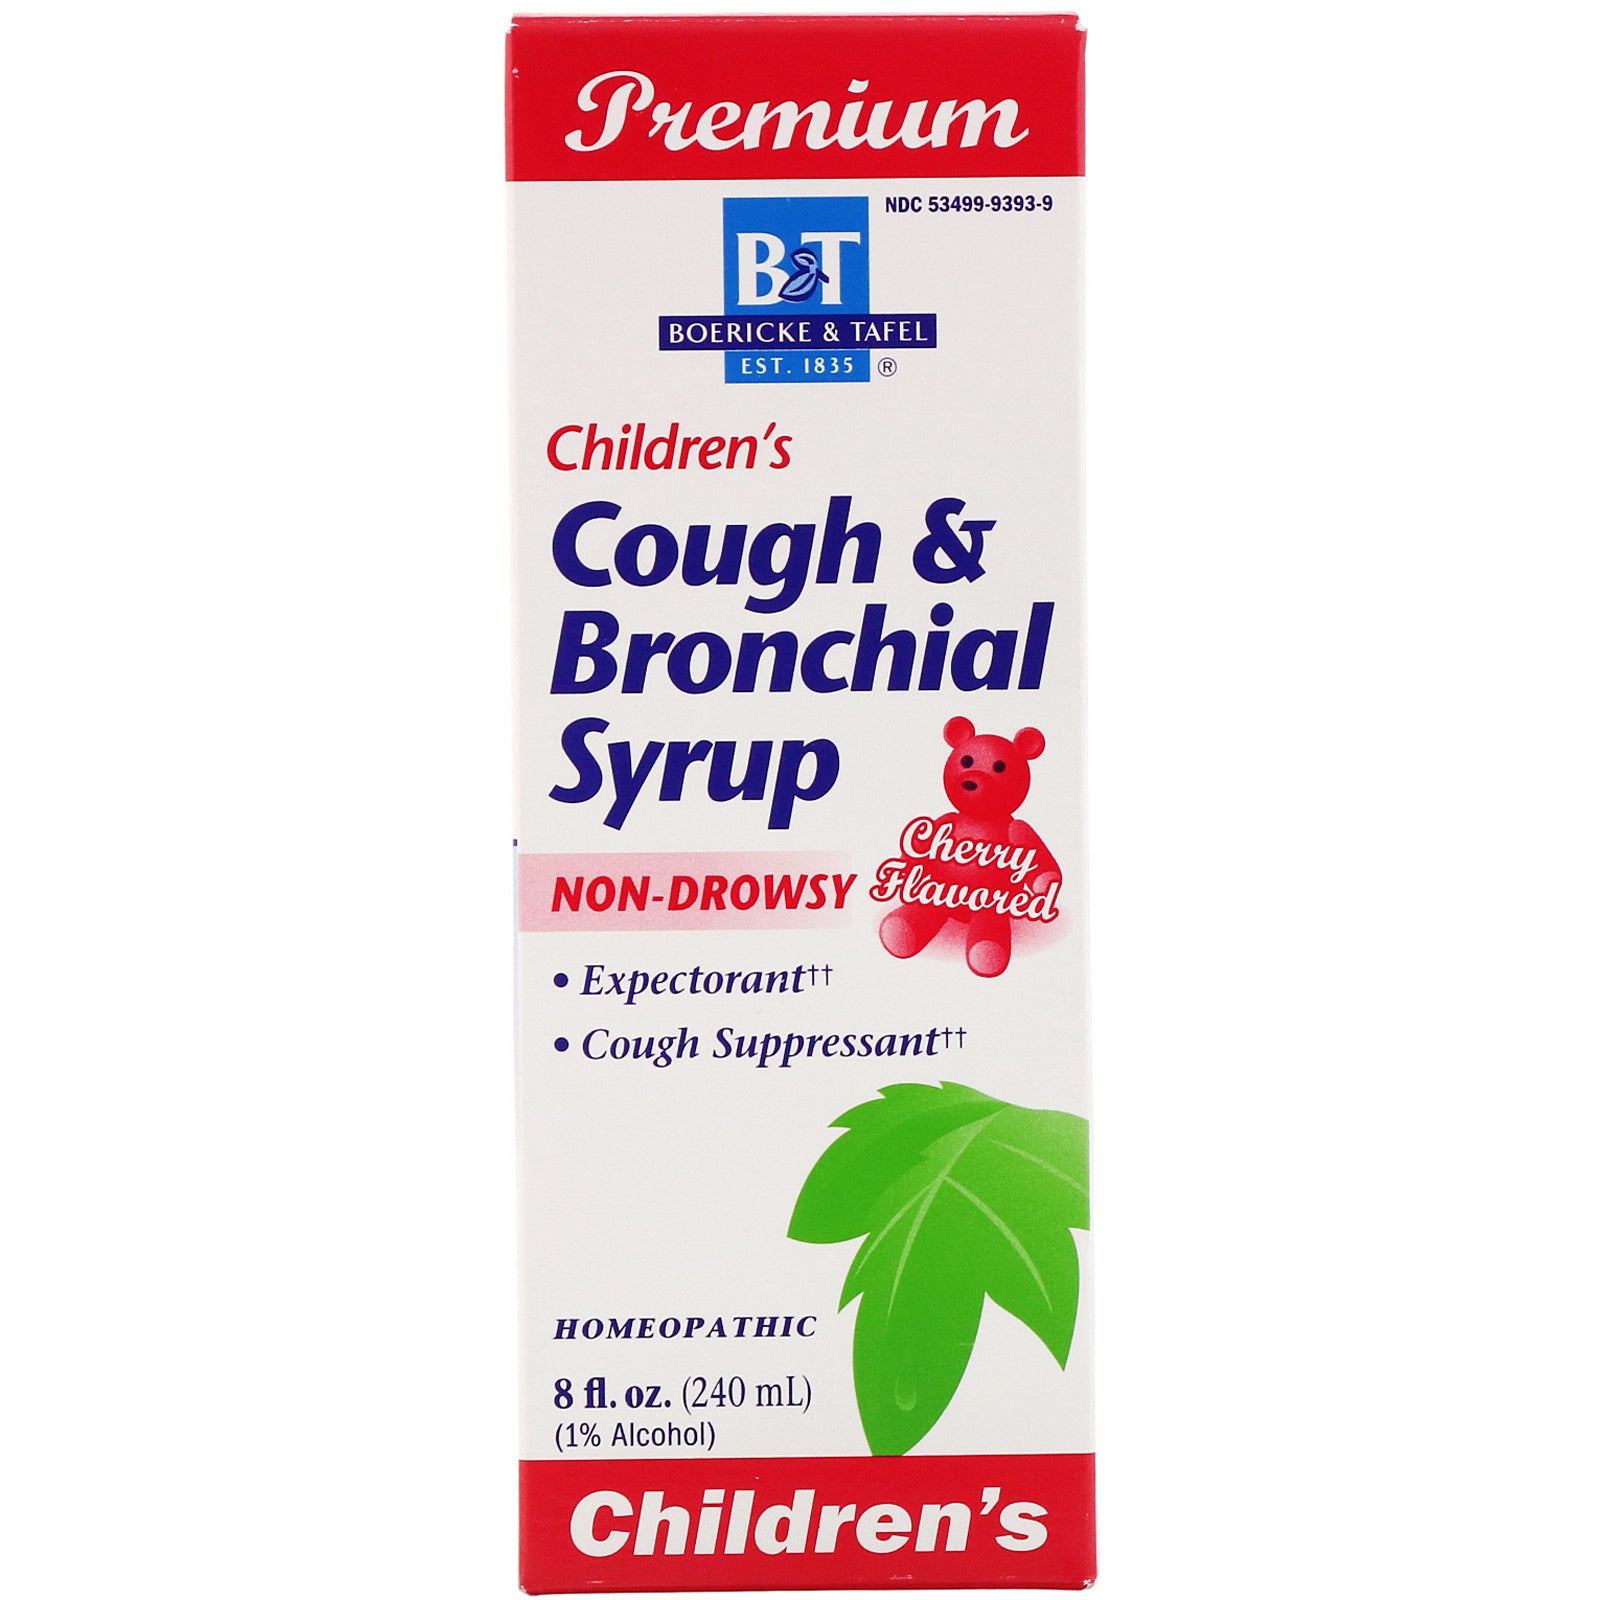 Boericke & Tafel, Premium, Children's Cough & Bronchial Syrup, Cherry Flavored